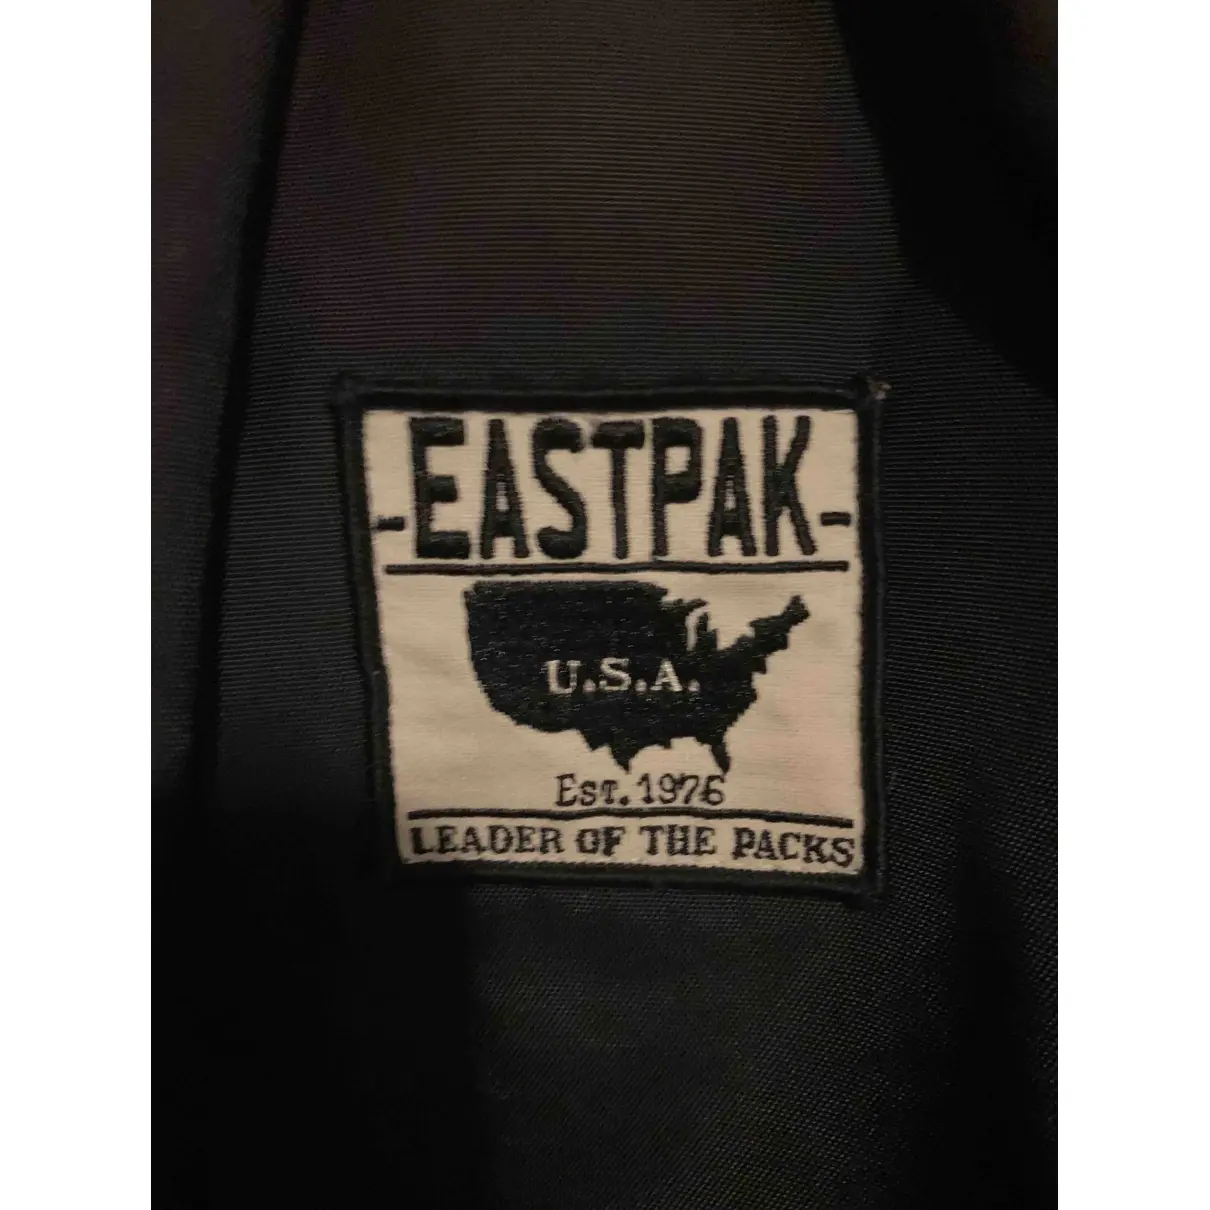 Leather weekend bag Eastpak